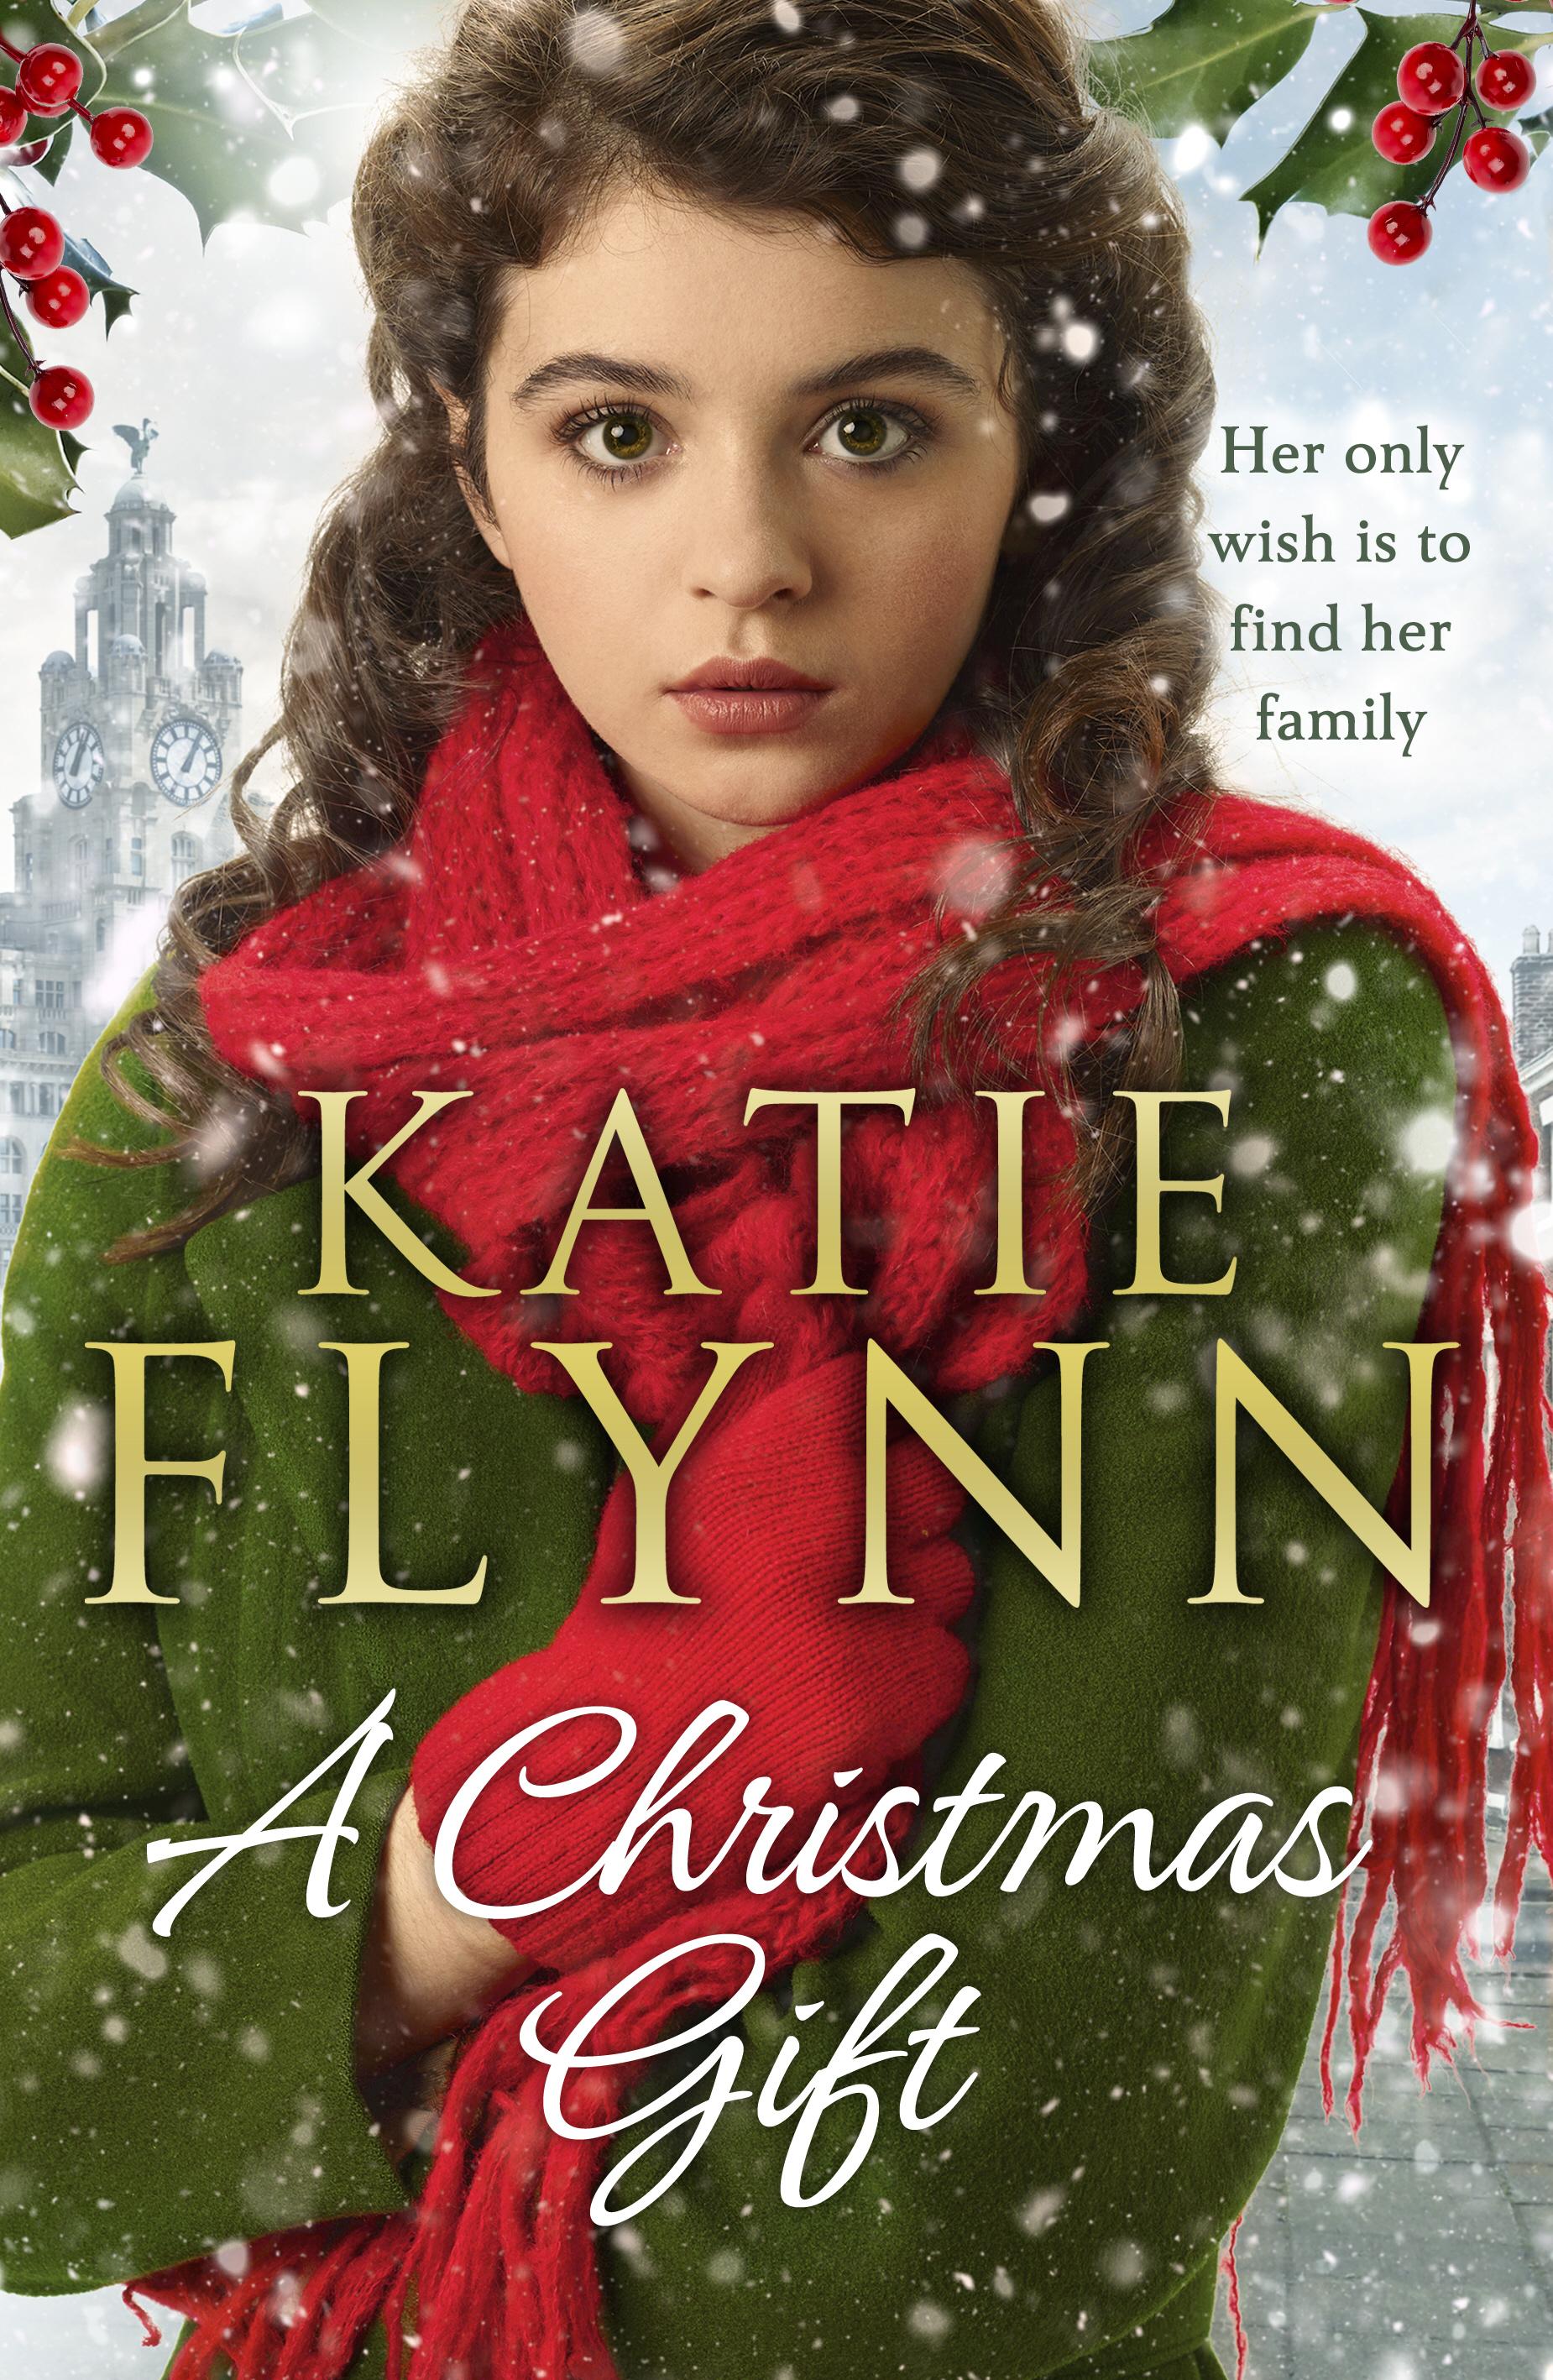 Christmas Gift - Katie Flynn